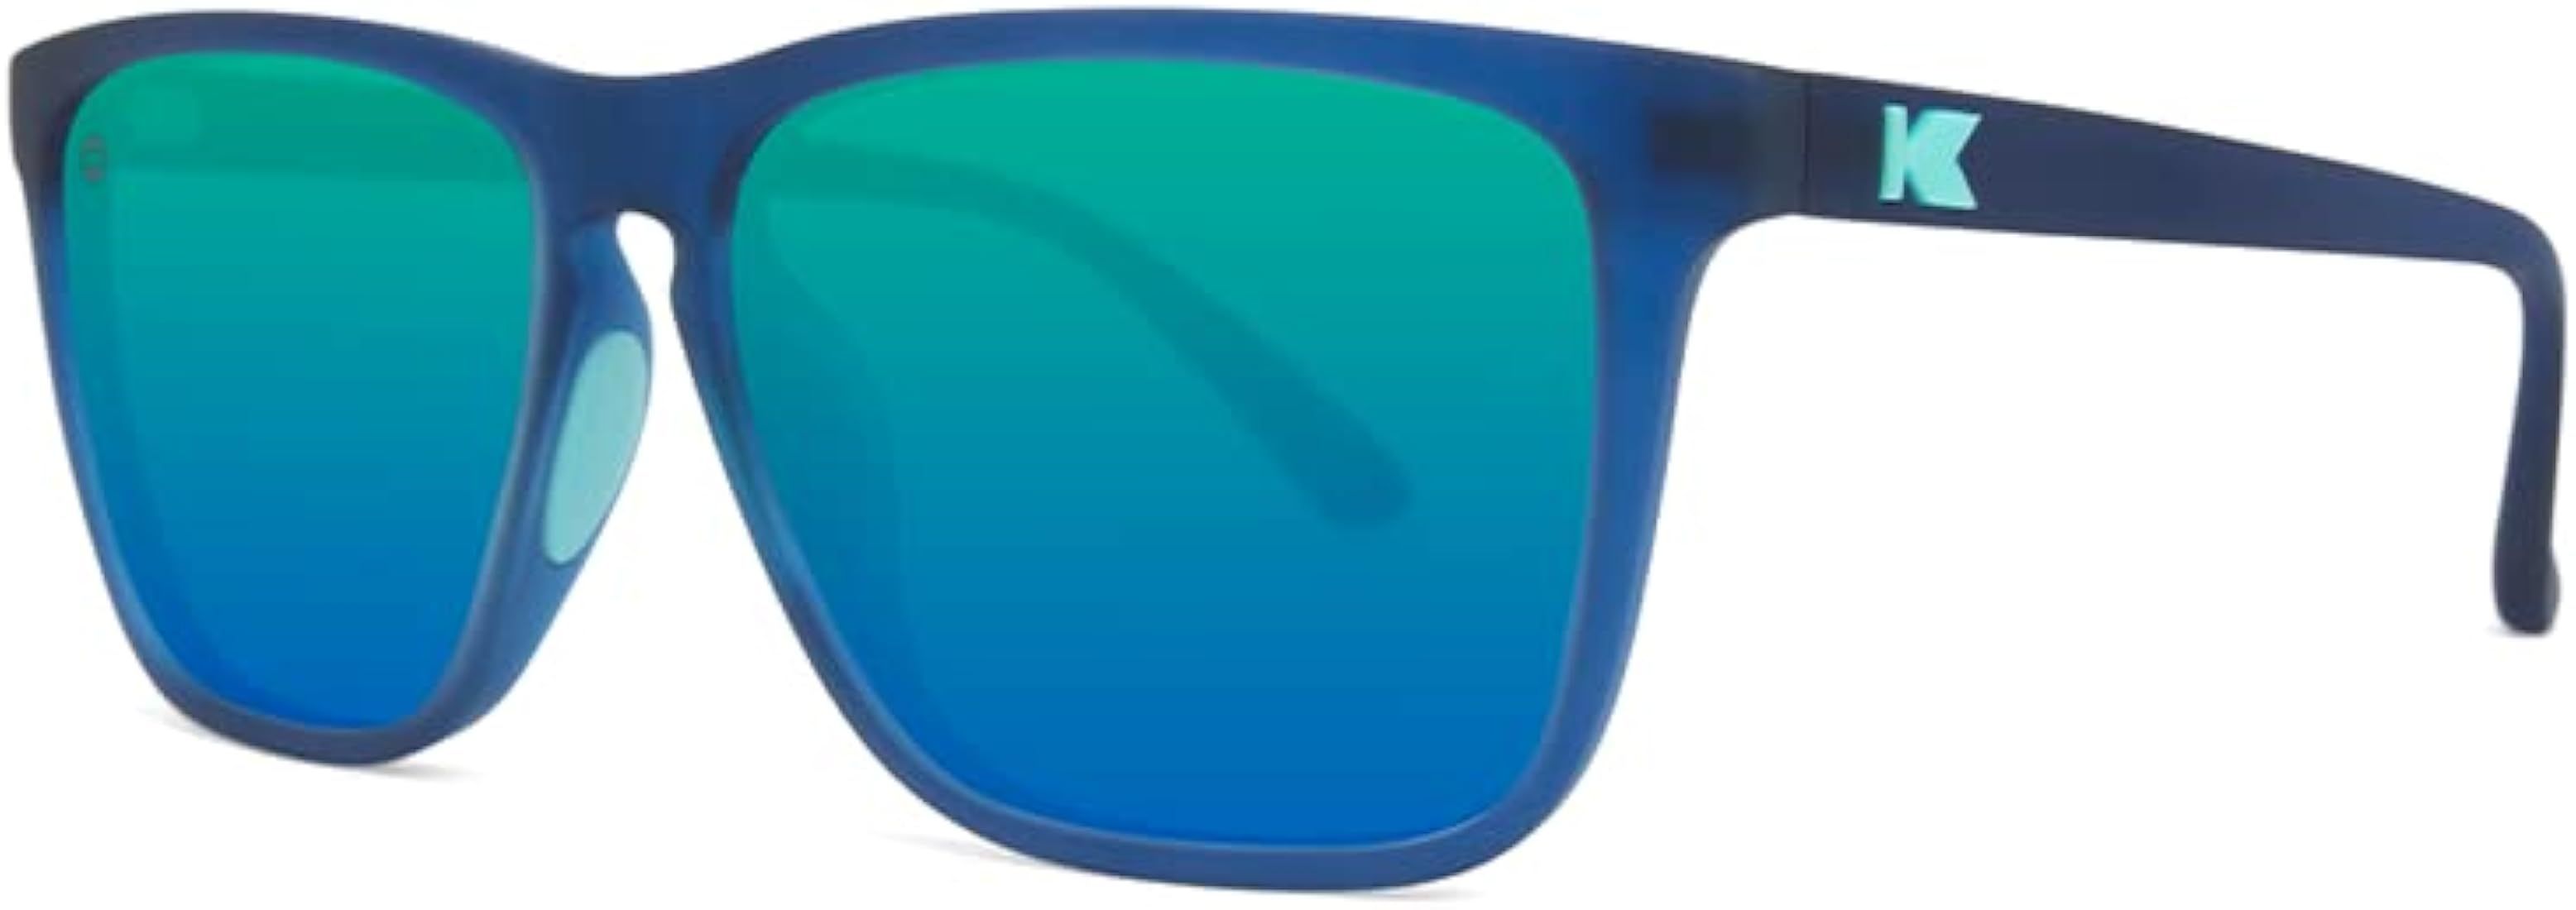 Knockaround Fast Lanes Sport - Polarized Running Sunglasses for Women & Men - Impact Resistant Lense | Amazon (US)